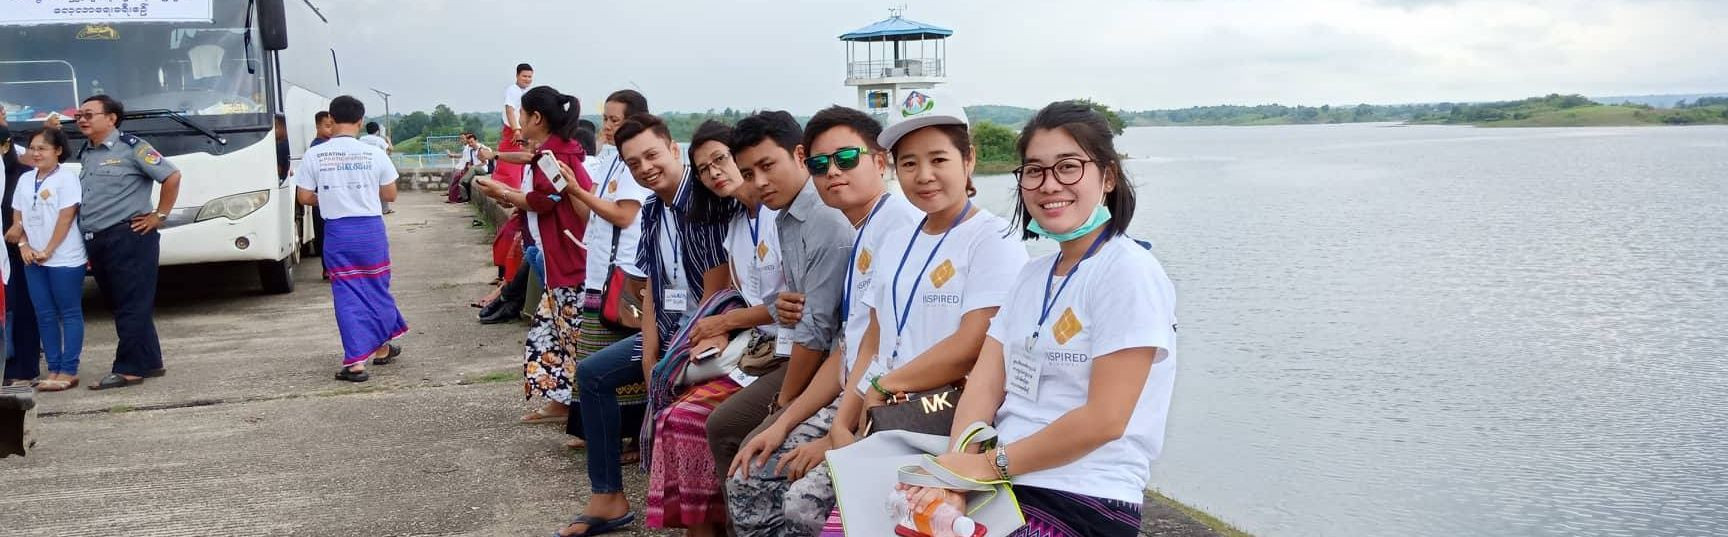 Civil society organizations visit public anti-drug programmes to better address drug problems in Myanmar